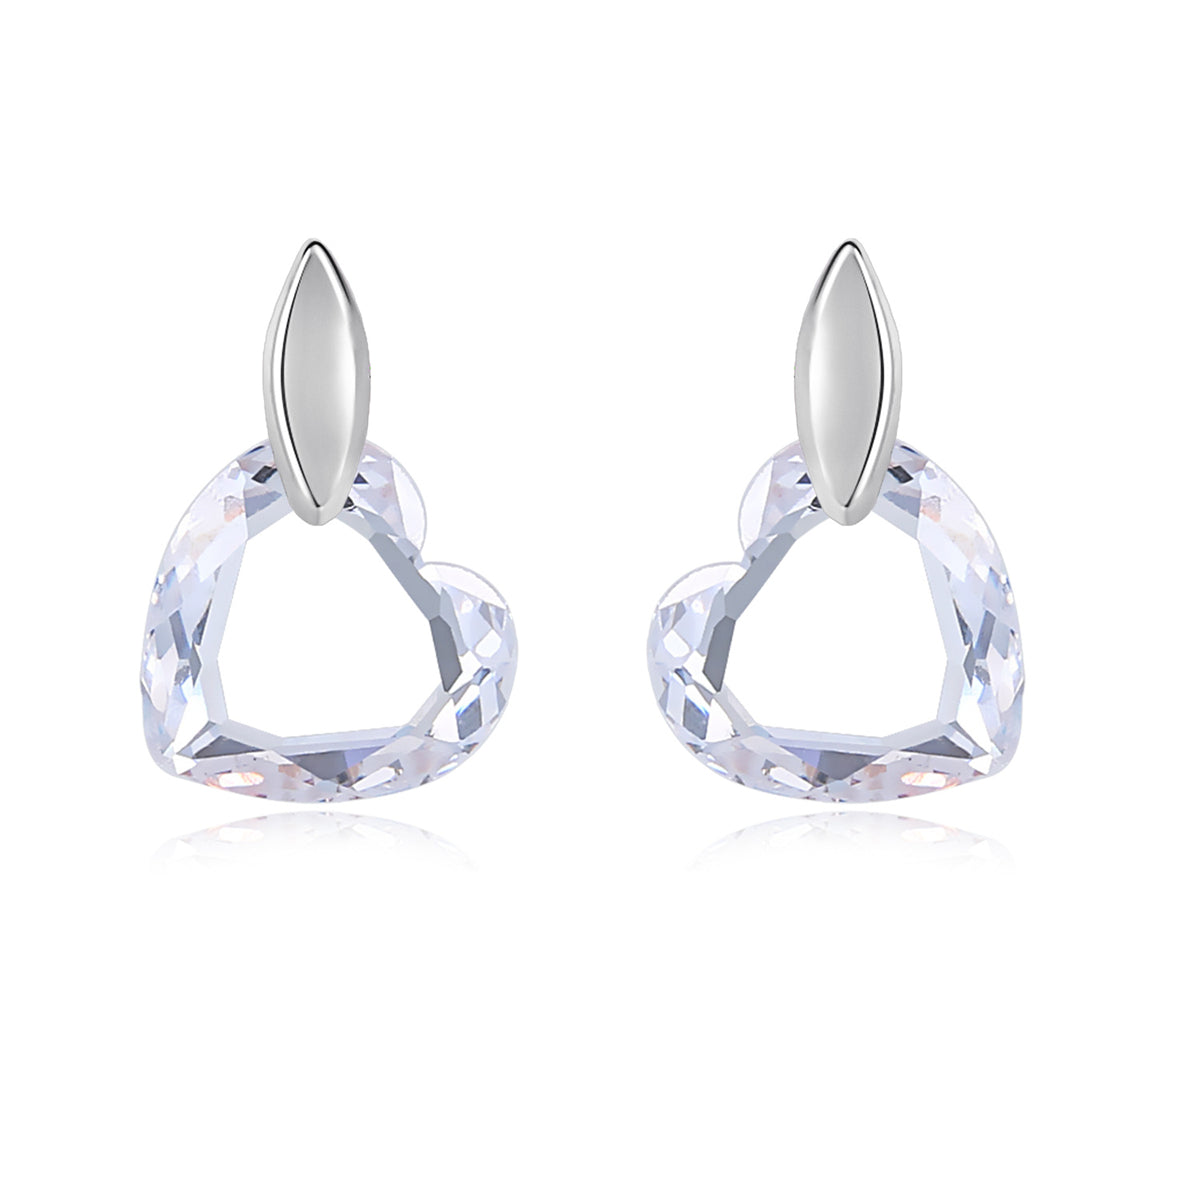 Clear Crystal & Silver-Plated Heart Drop Earrings